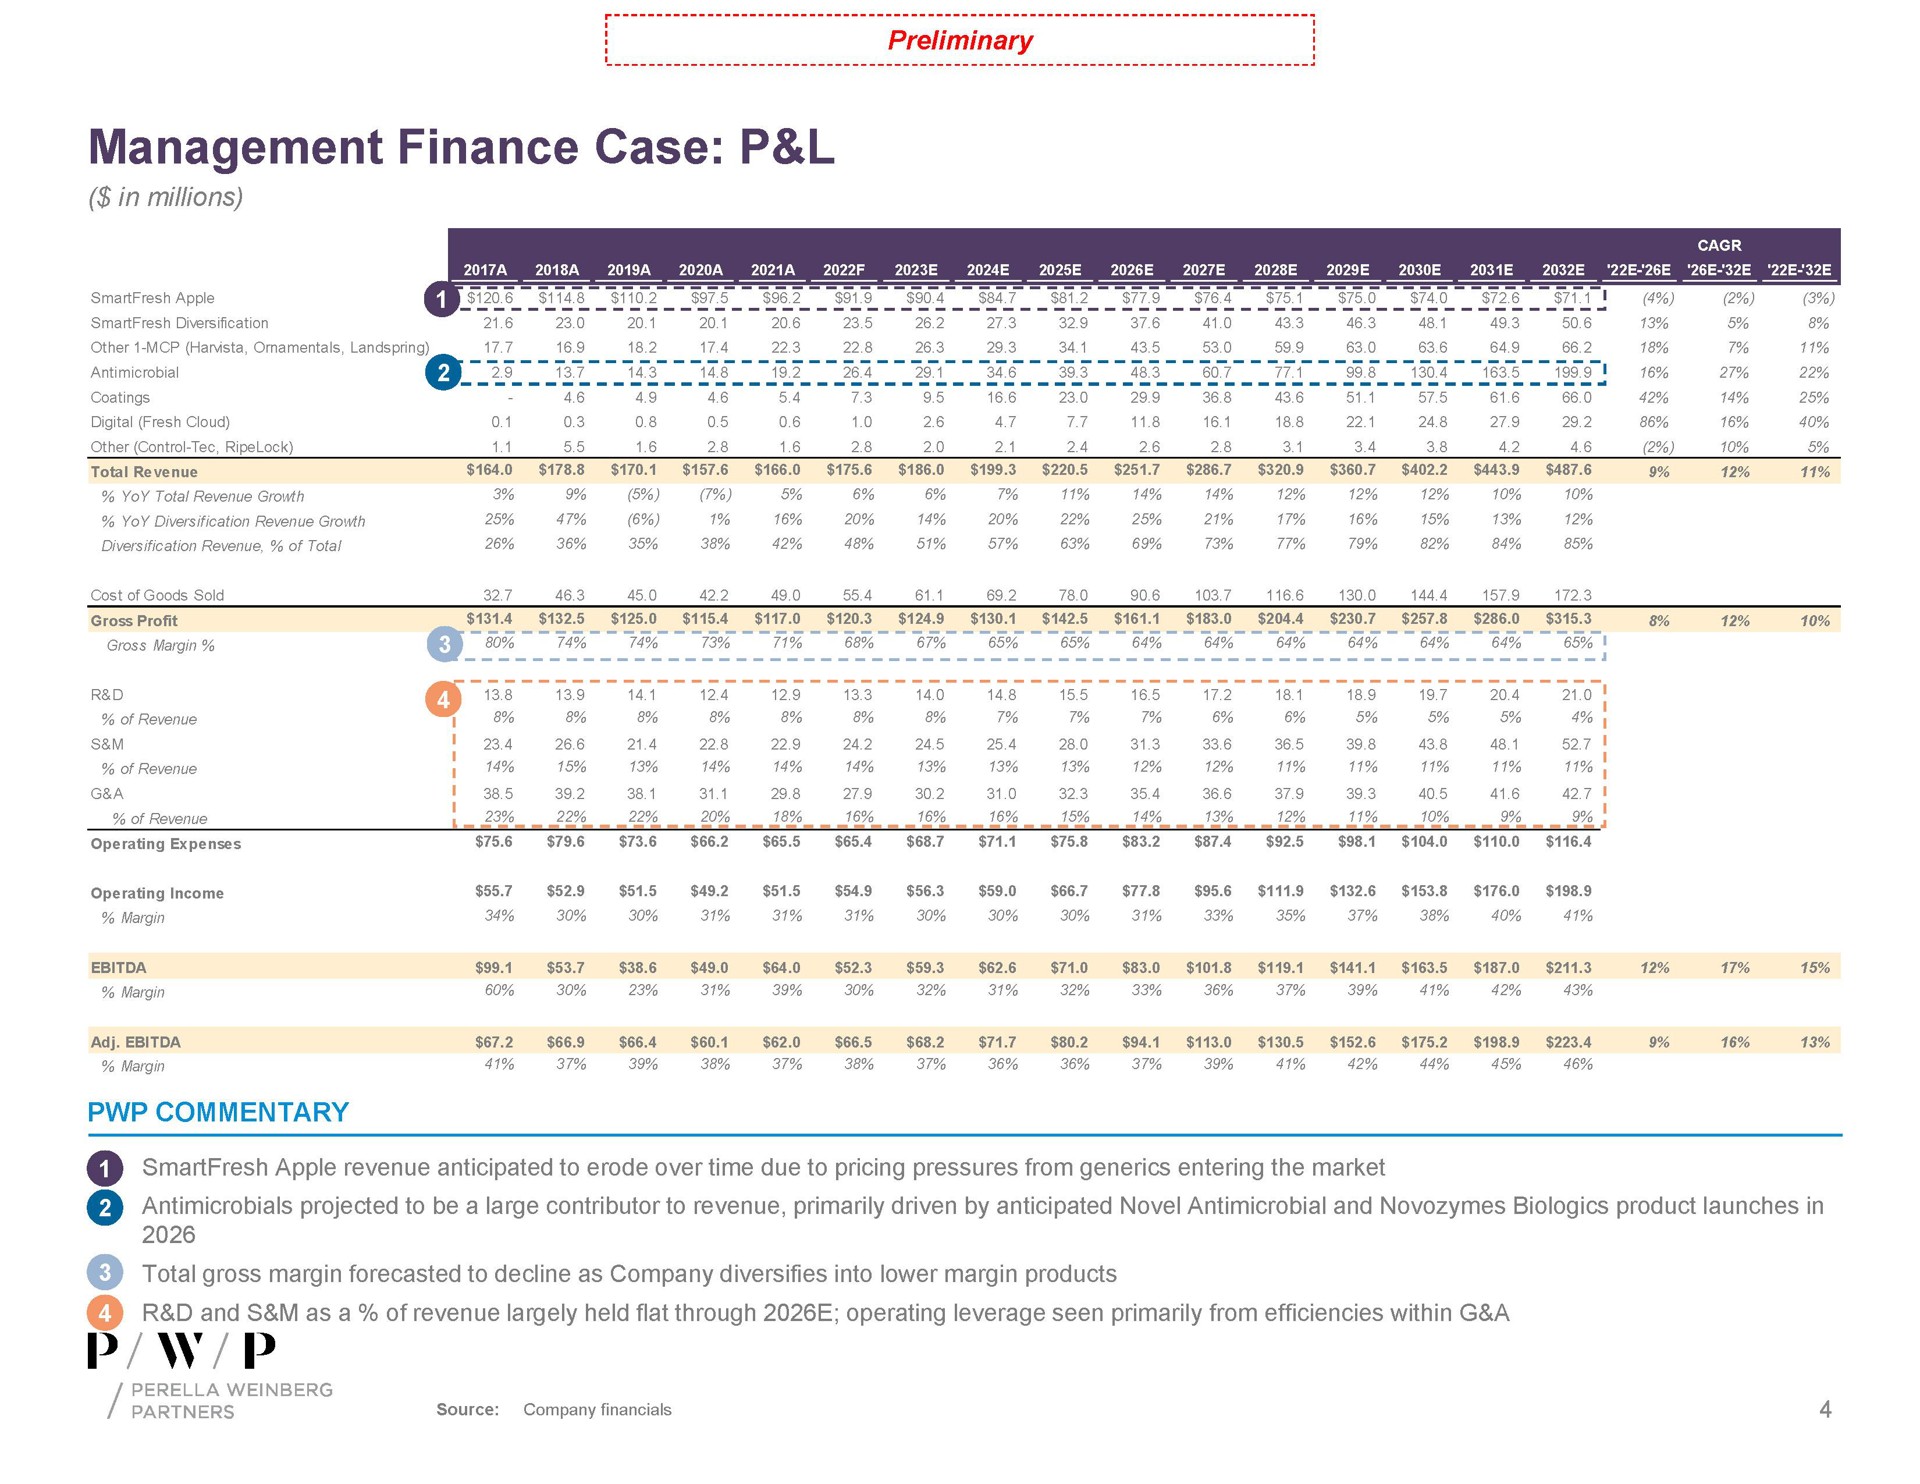 management finance case | Perella Weinberg Partners